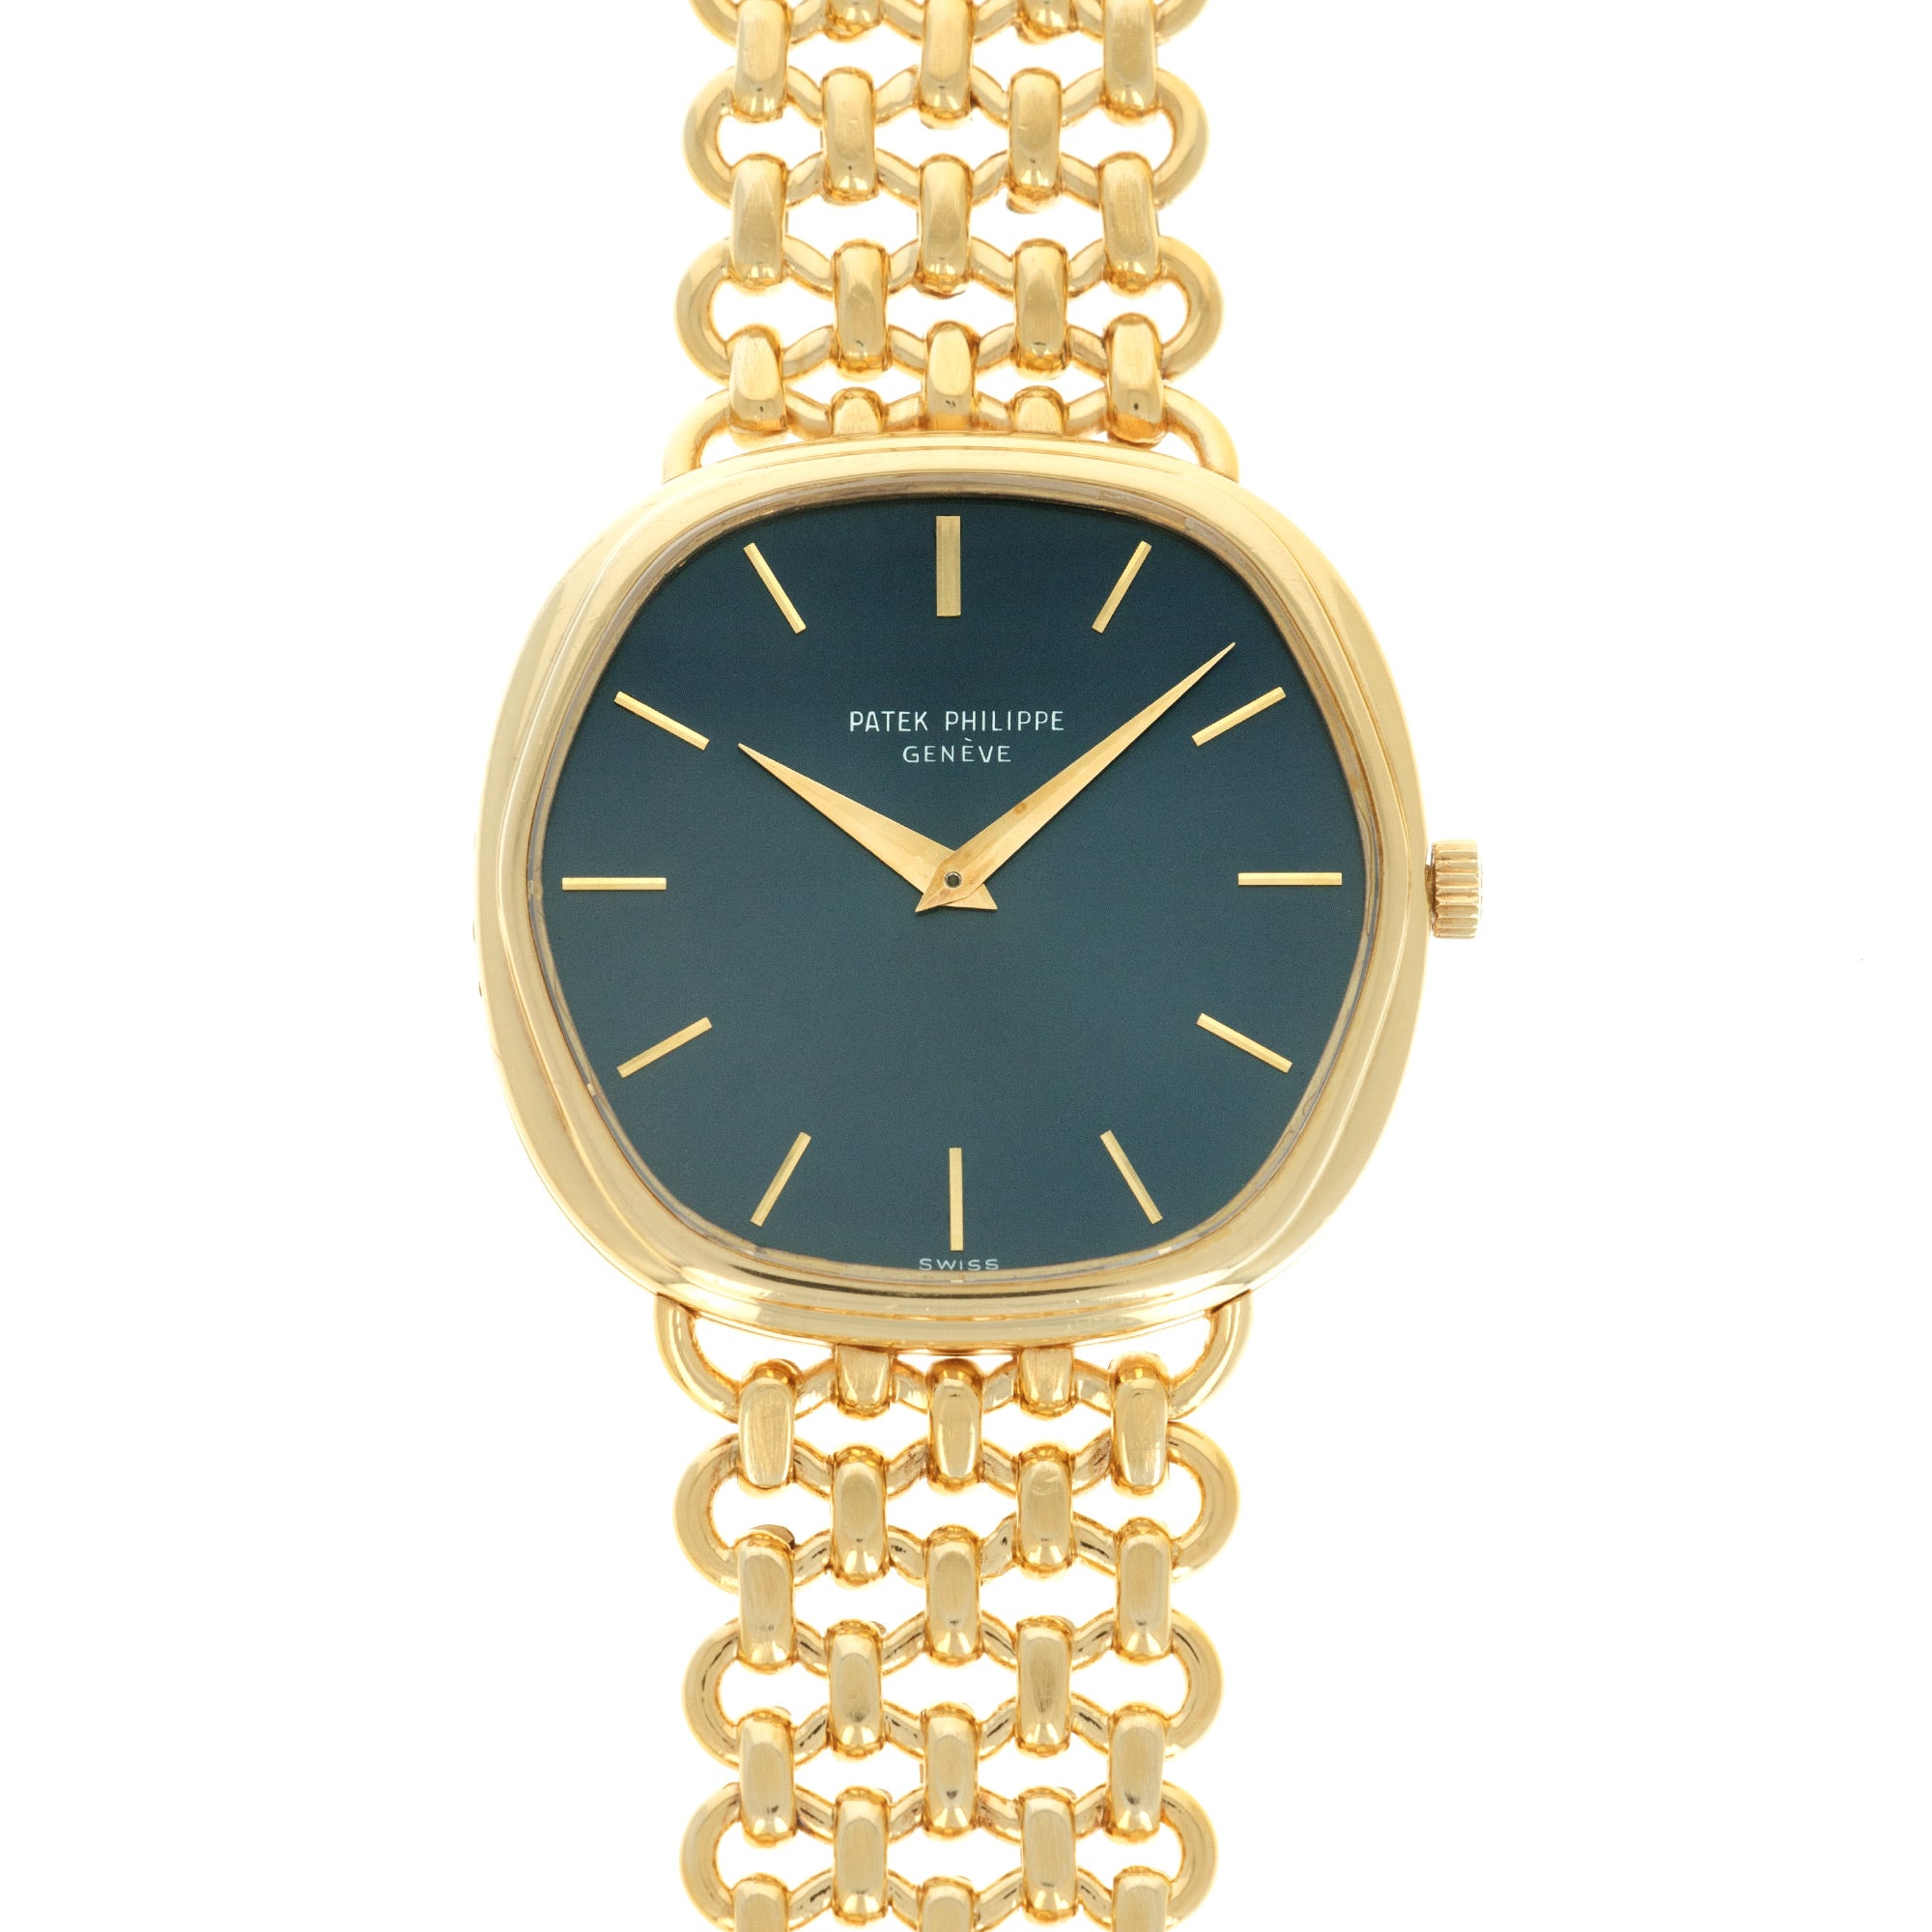 Patek Philippe - Patek Philippe Yellow Gold Automatic Bracelet Watch - The Keystone Watches